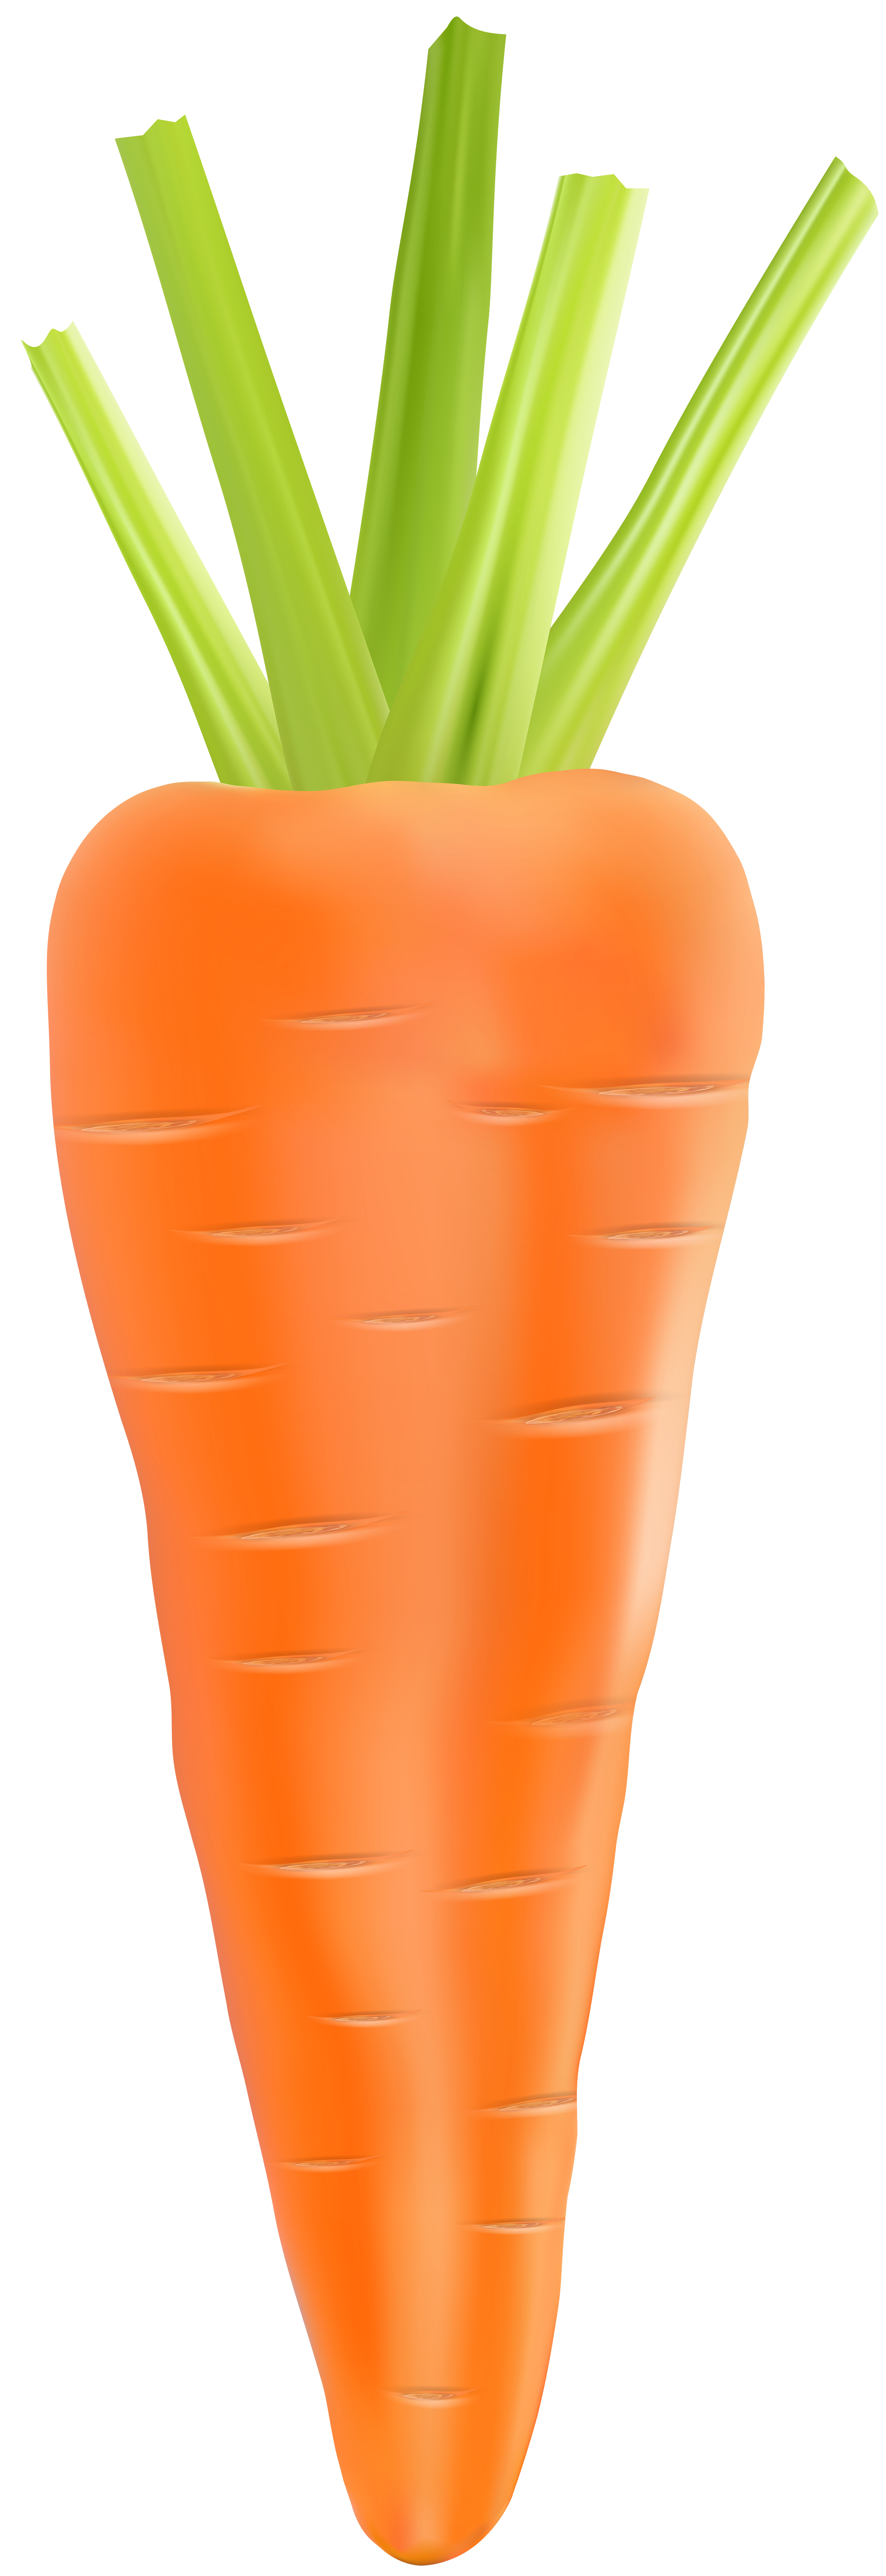 Carrot transparent png clip. Name clipart vegetable